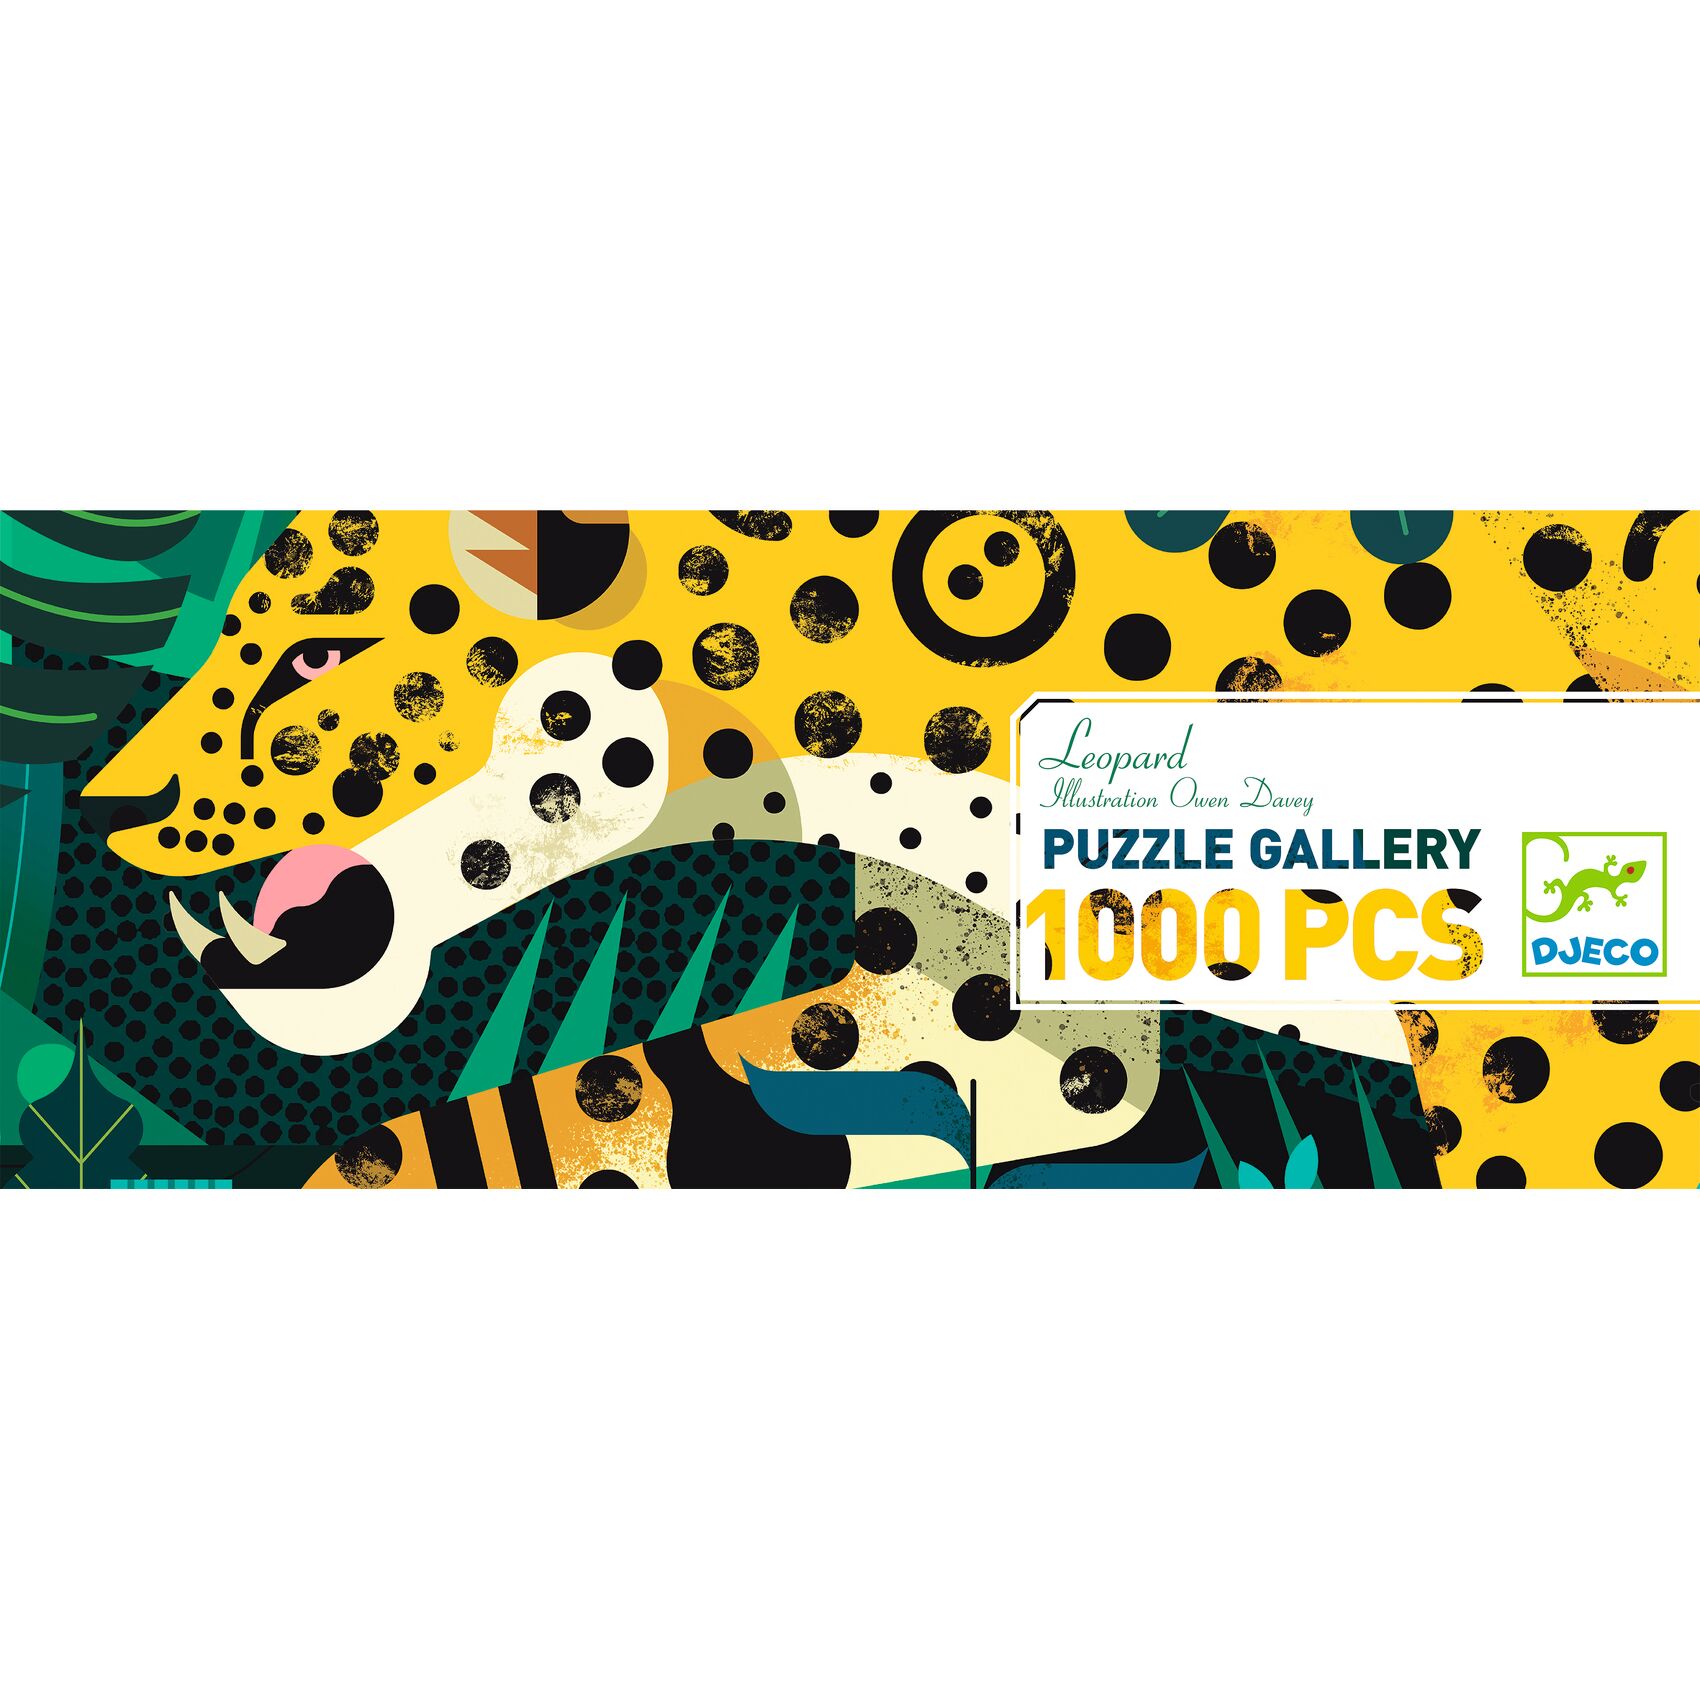 Пазл-галерея Леопард 1000 элементов  